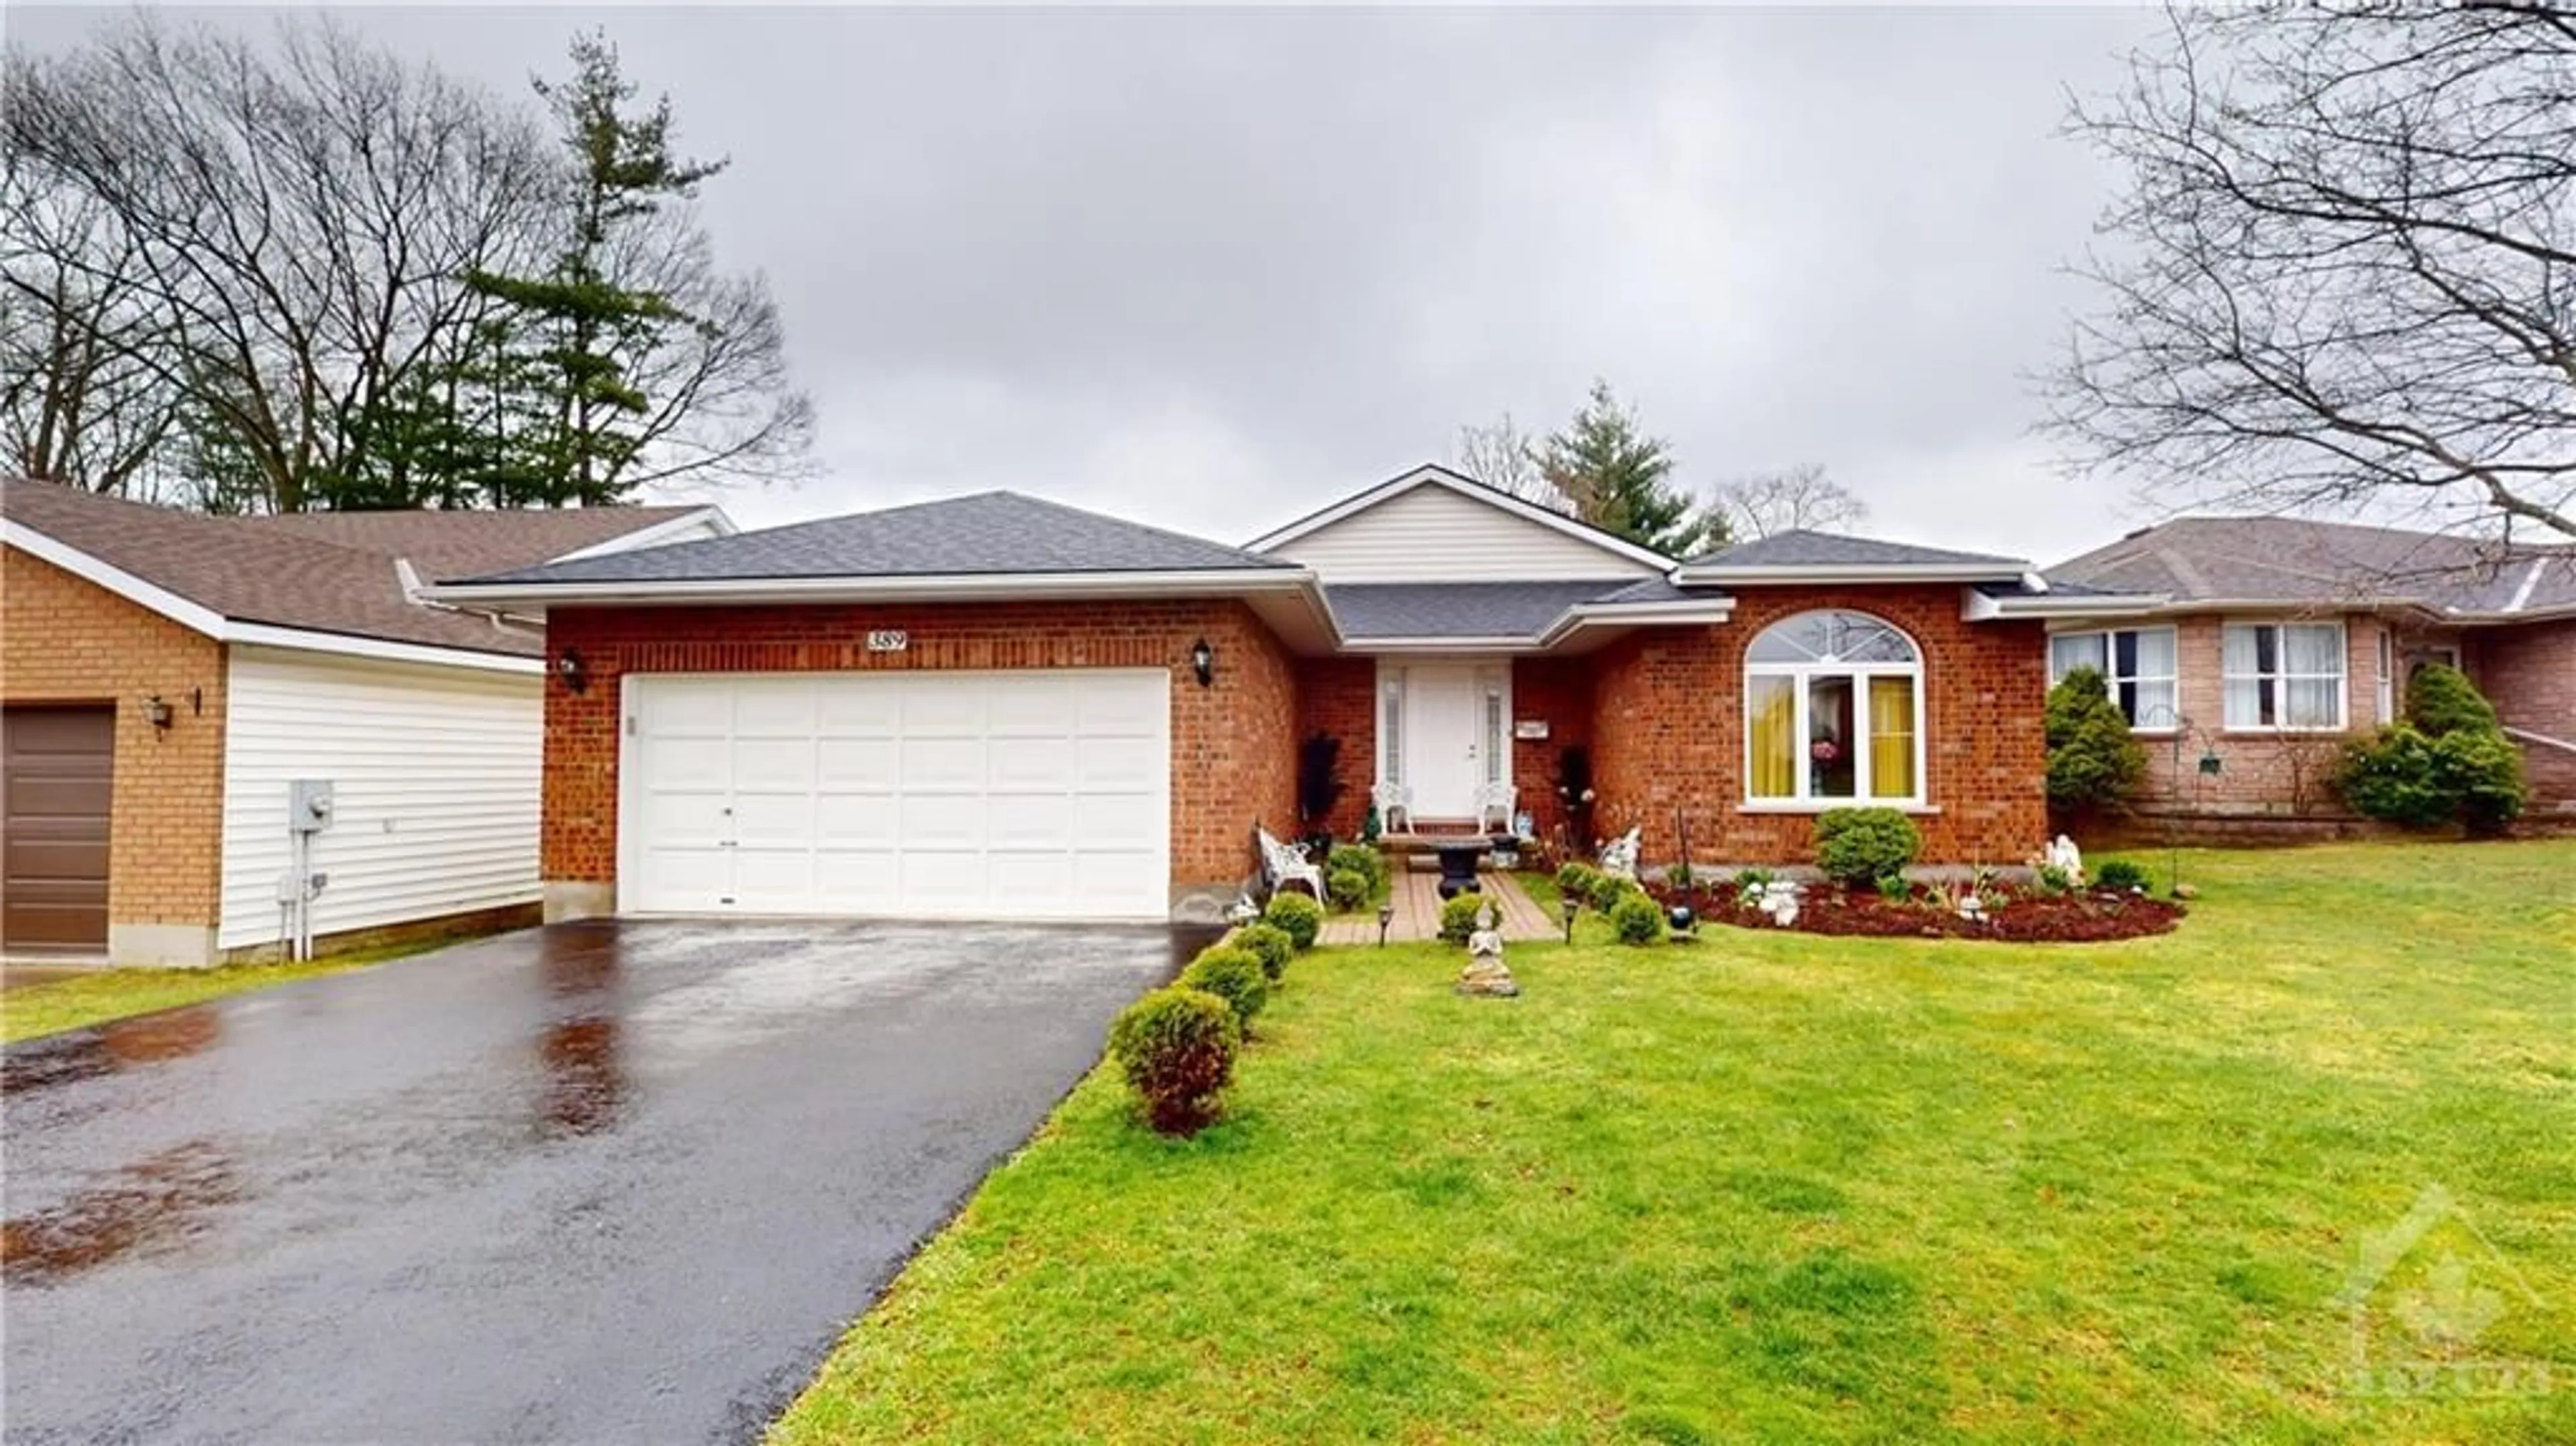 Home with brick exterior material for 389 BROCK St, Brockville Ontario K6V 6E8